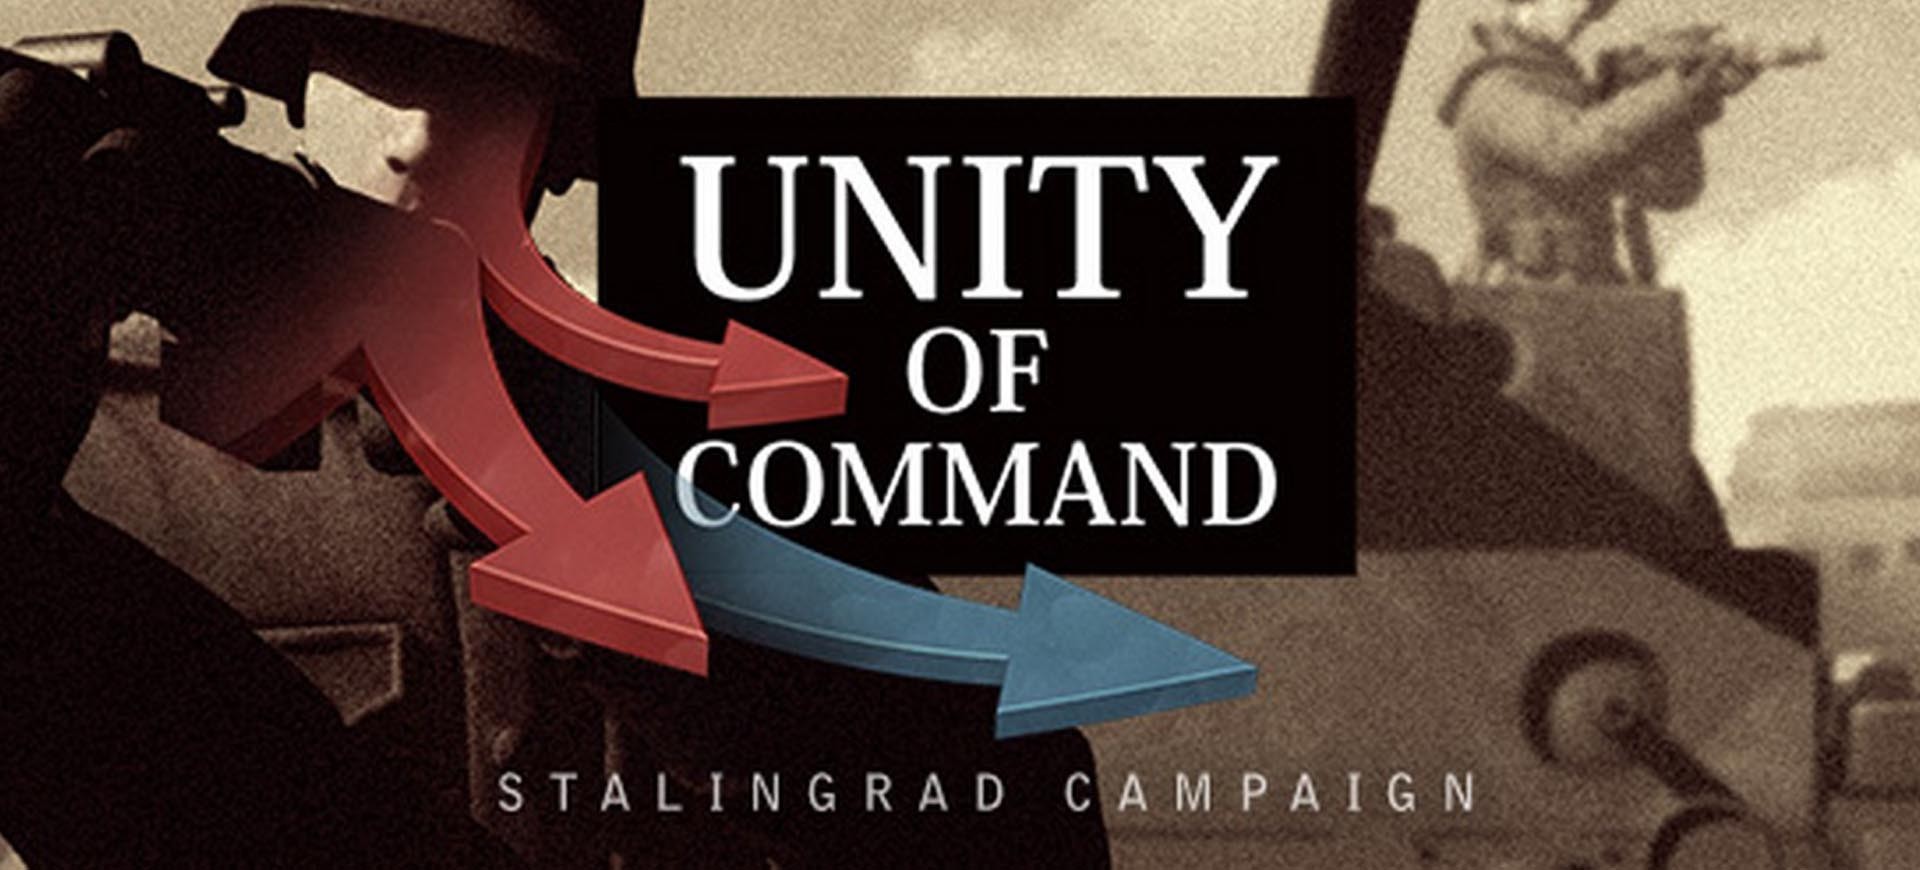 unity-of-command